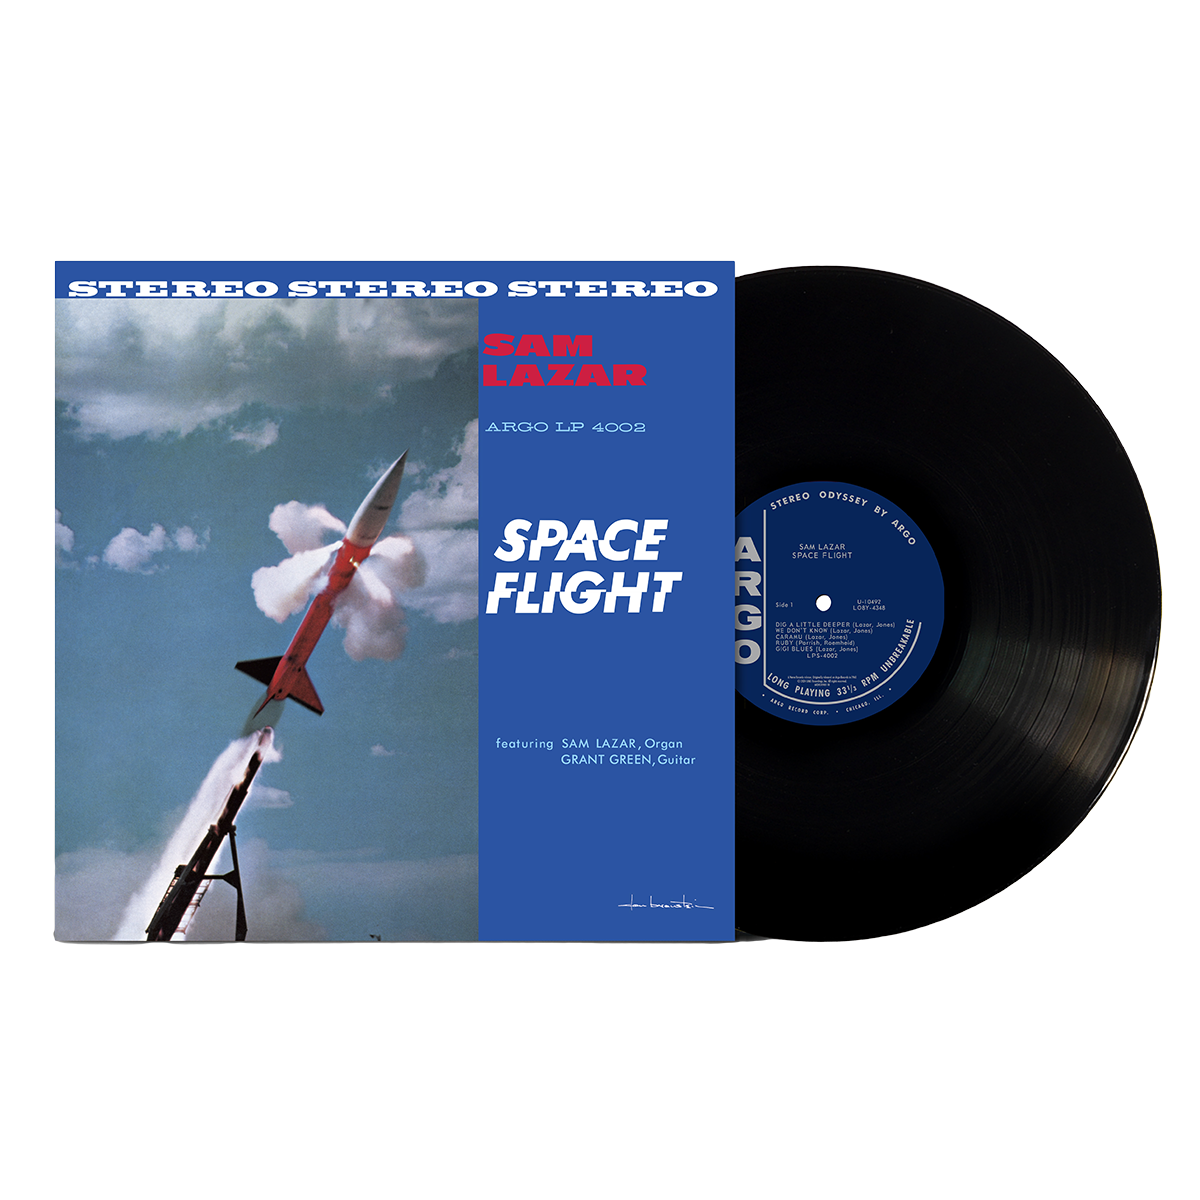 Sam Lazaar - Space Flight (Verve By Request): Vinyl LP